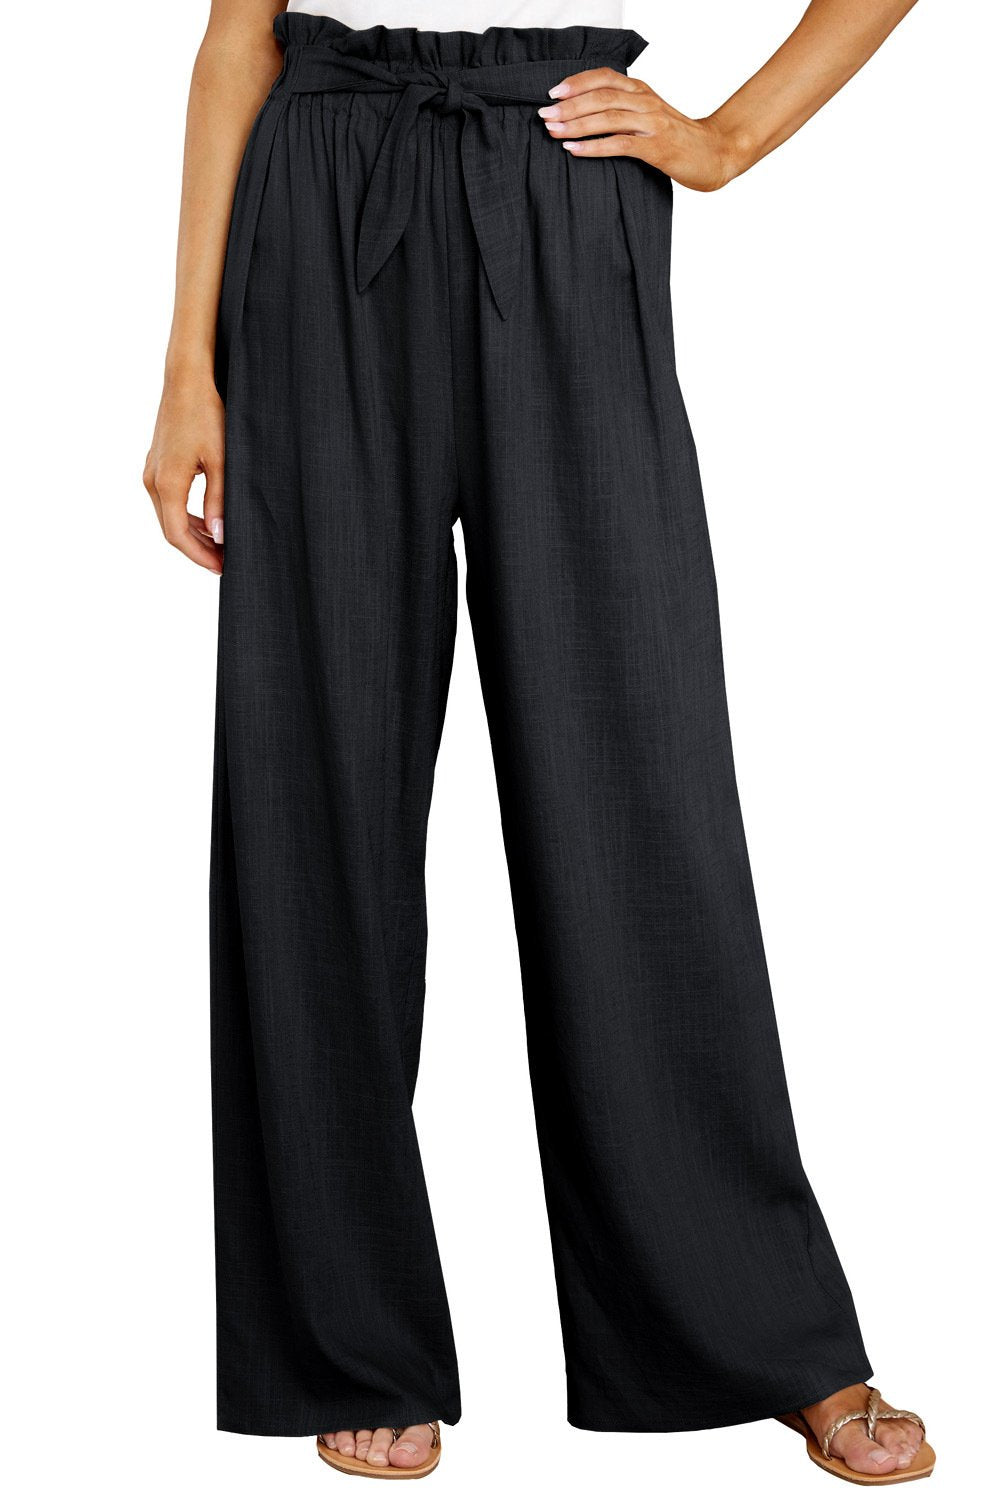 Casual Women Linen Long Pants-Black-S-Free Shipping at meselling99